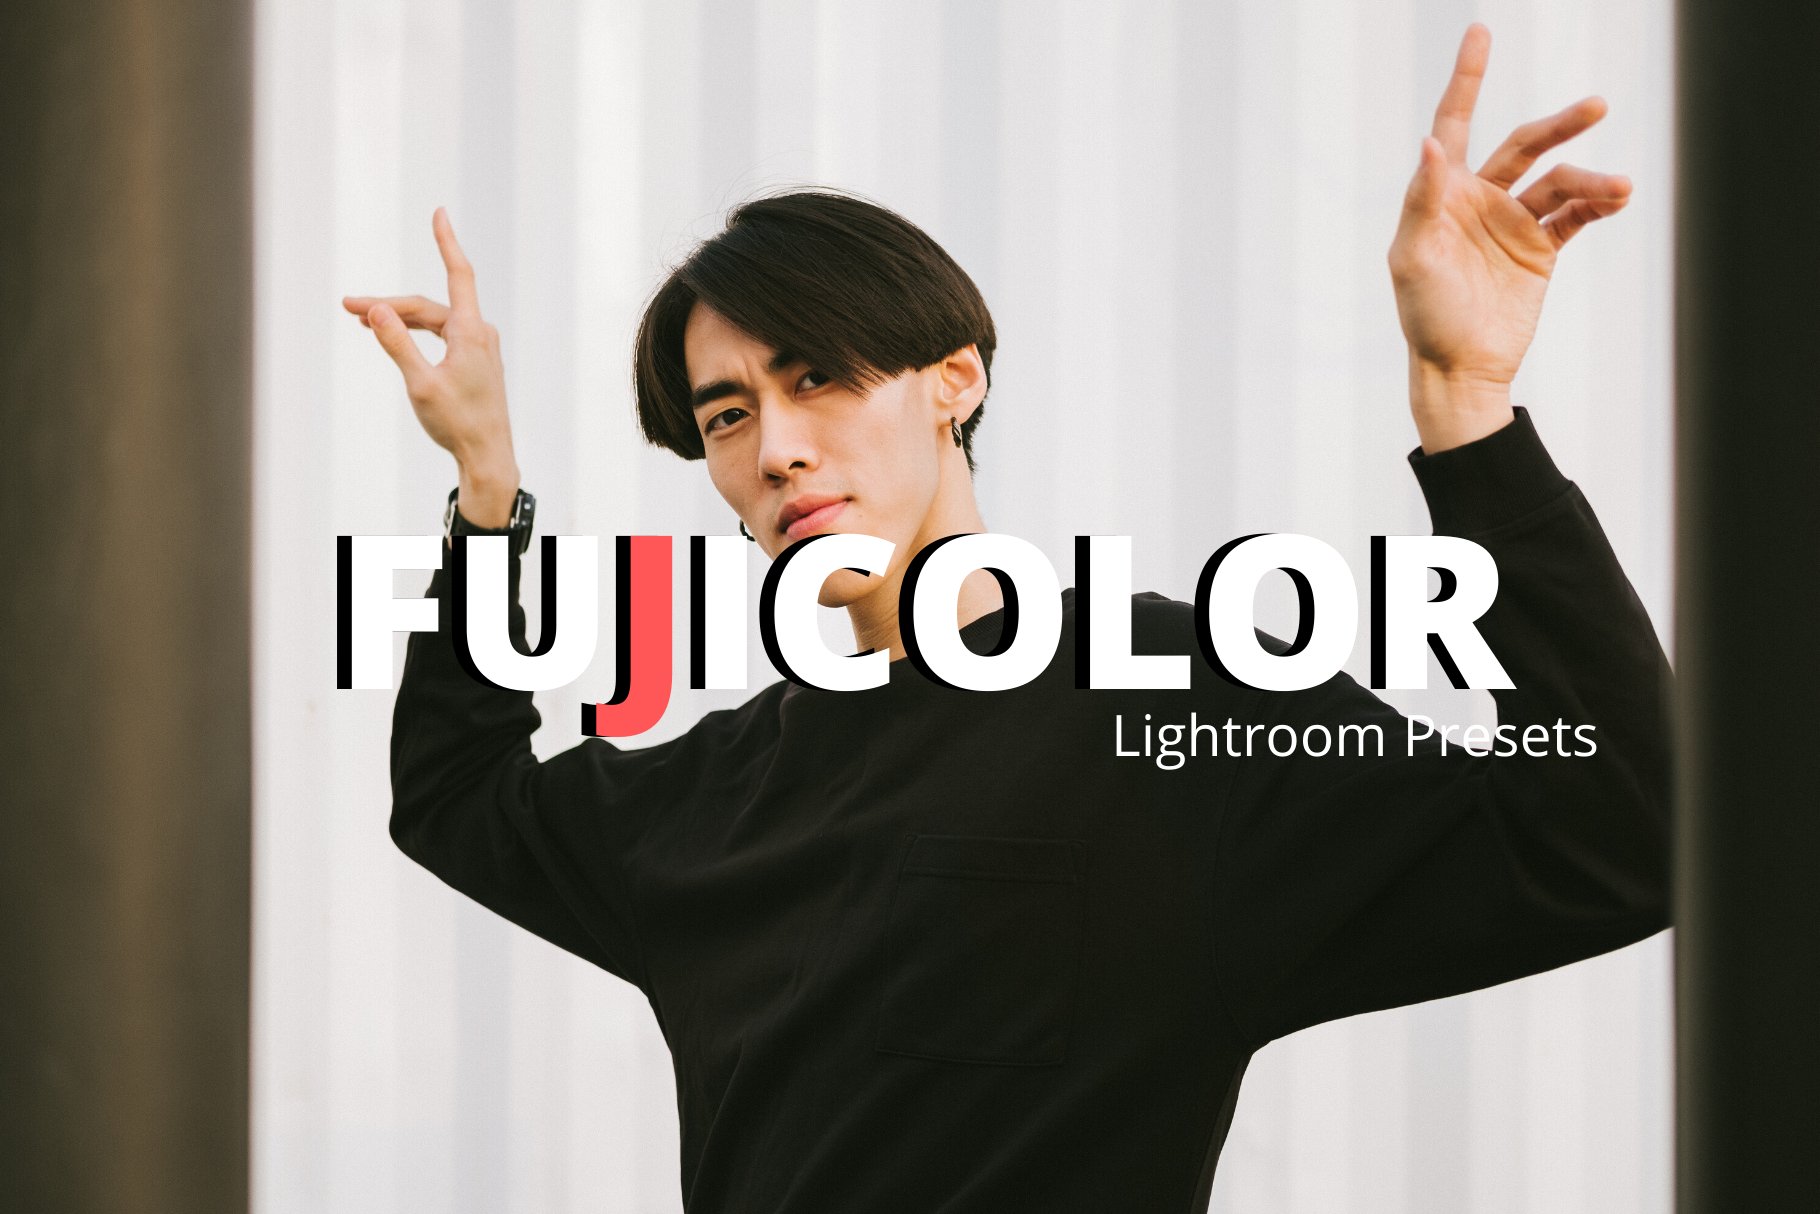 Fujicolor Lightroom Presets XMP/DNGcover image.